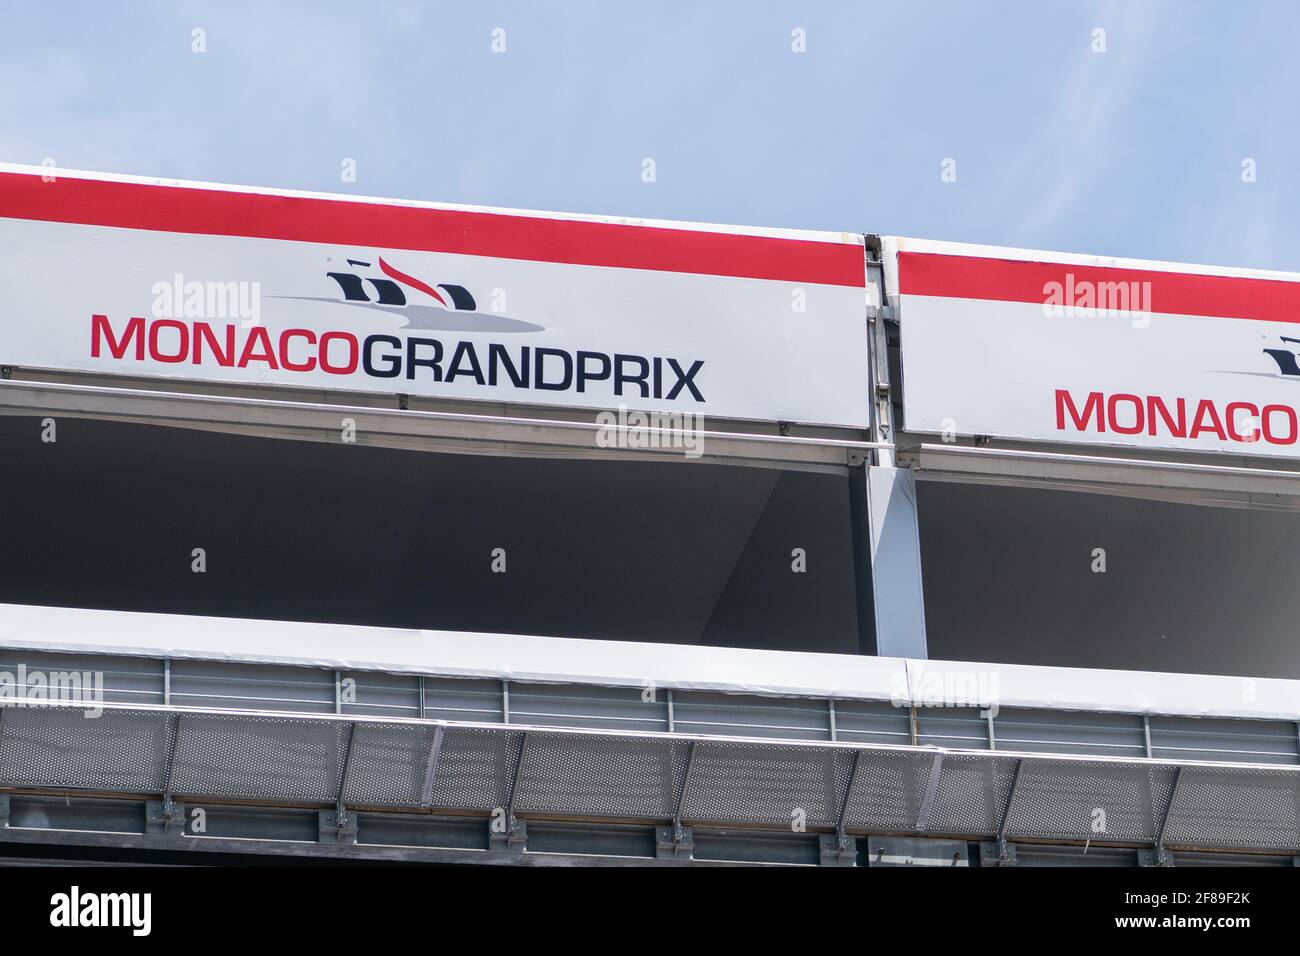 Grand prix tribunes in Monaco Stock Photo